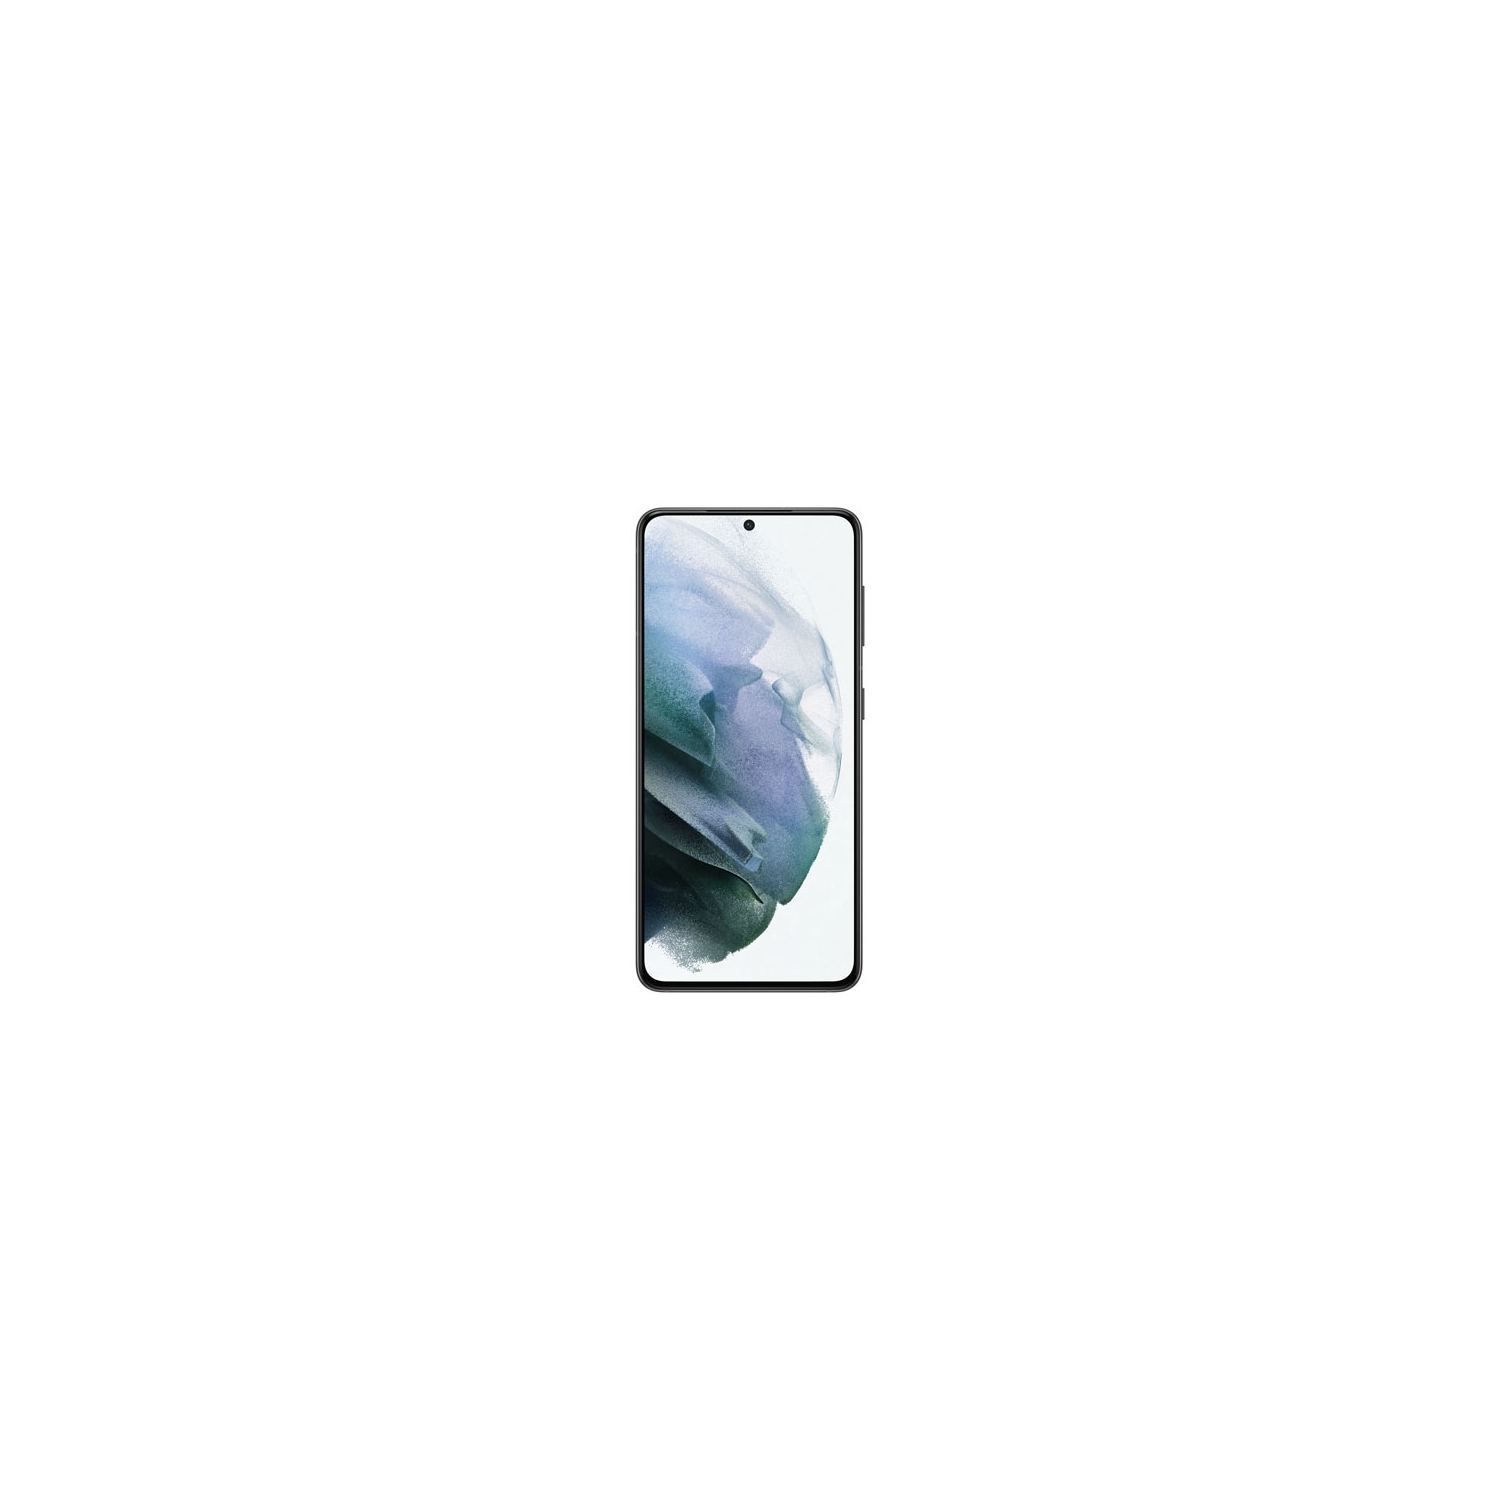 Samsung Galaxy S21 128GB Smartphone - Phantom Grey - Unlocked - Open Box